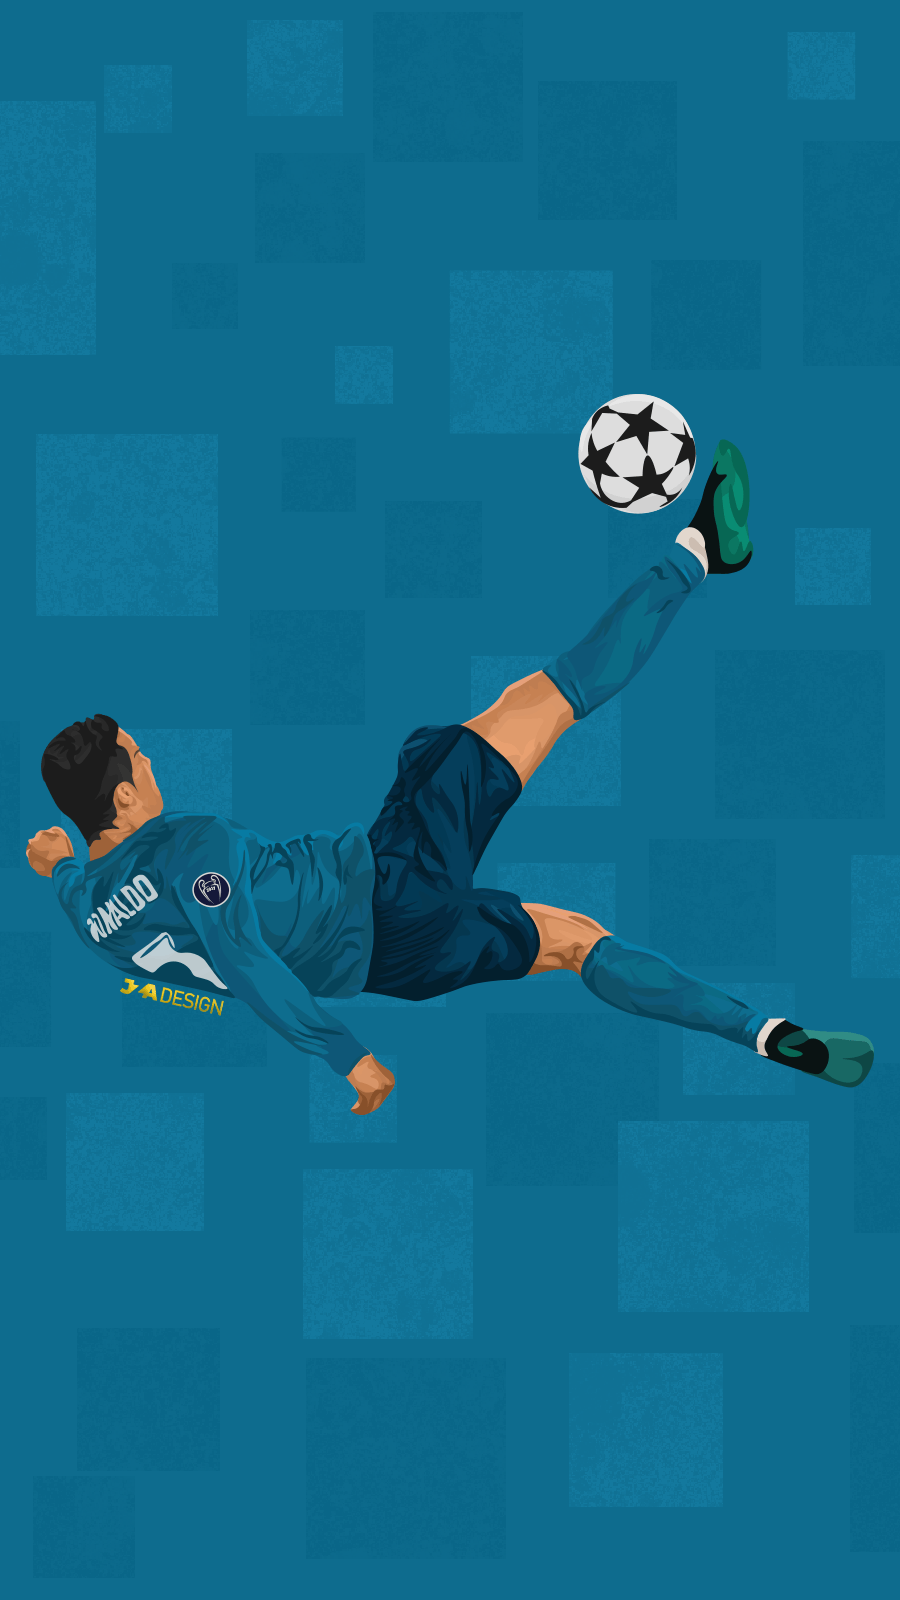 Cristiano Ronaldo - Soccer Players - Zerochan Anime Image Board